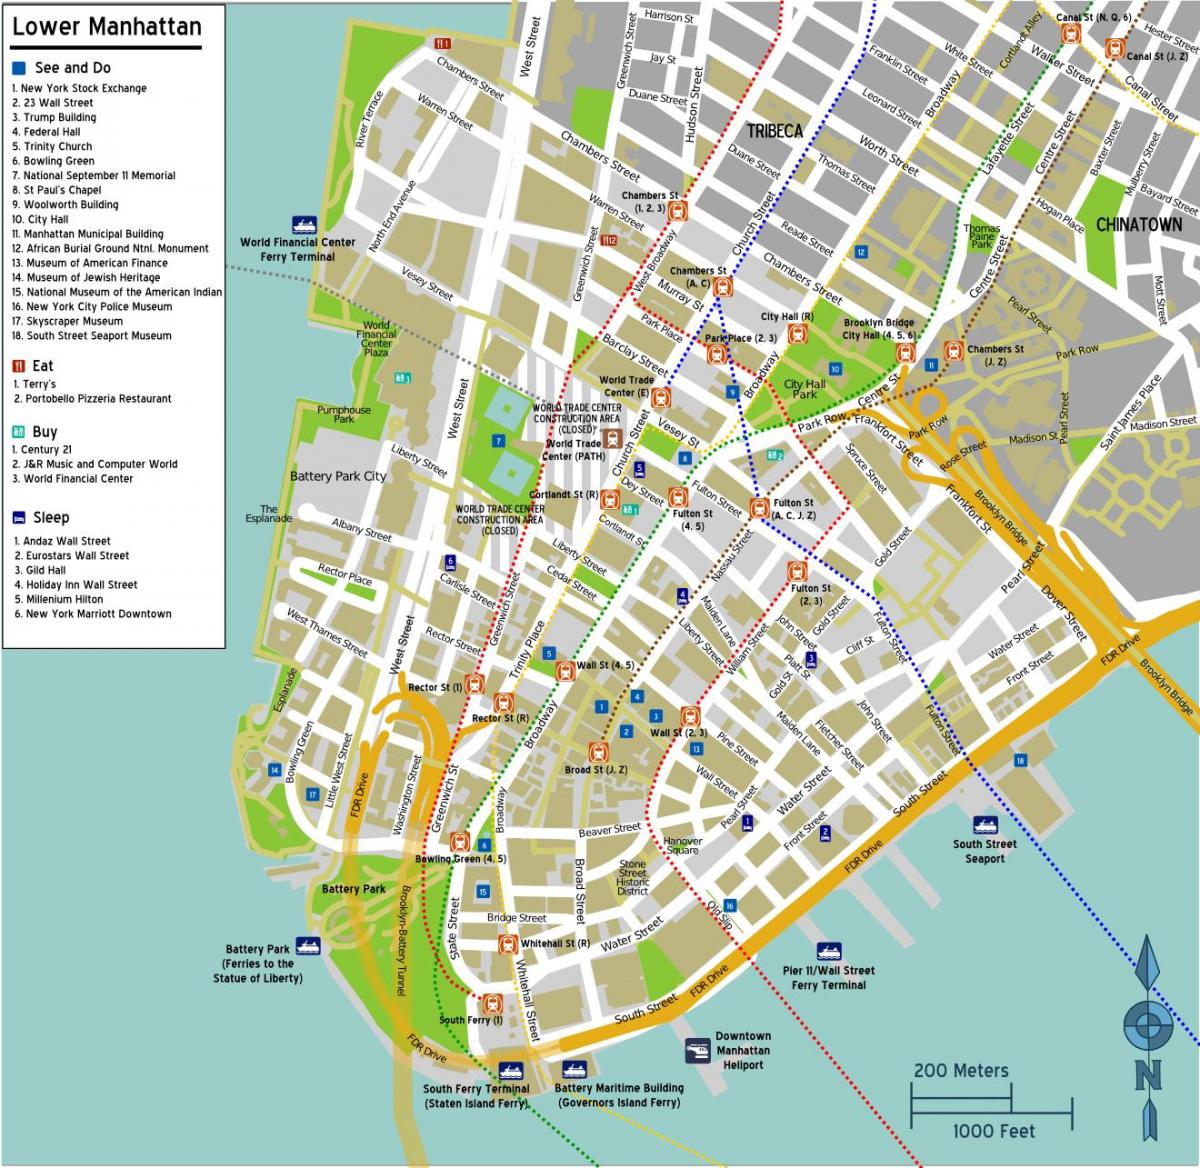 kort over lower Manhattan med gadenavne